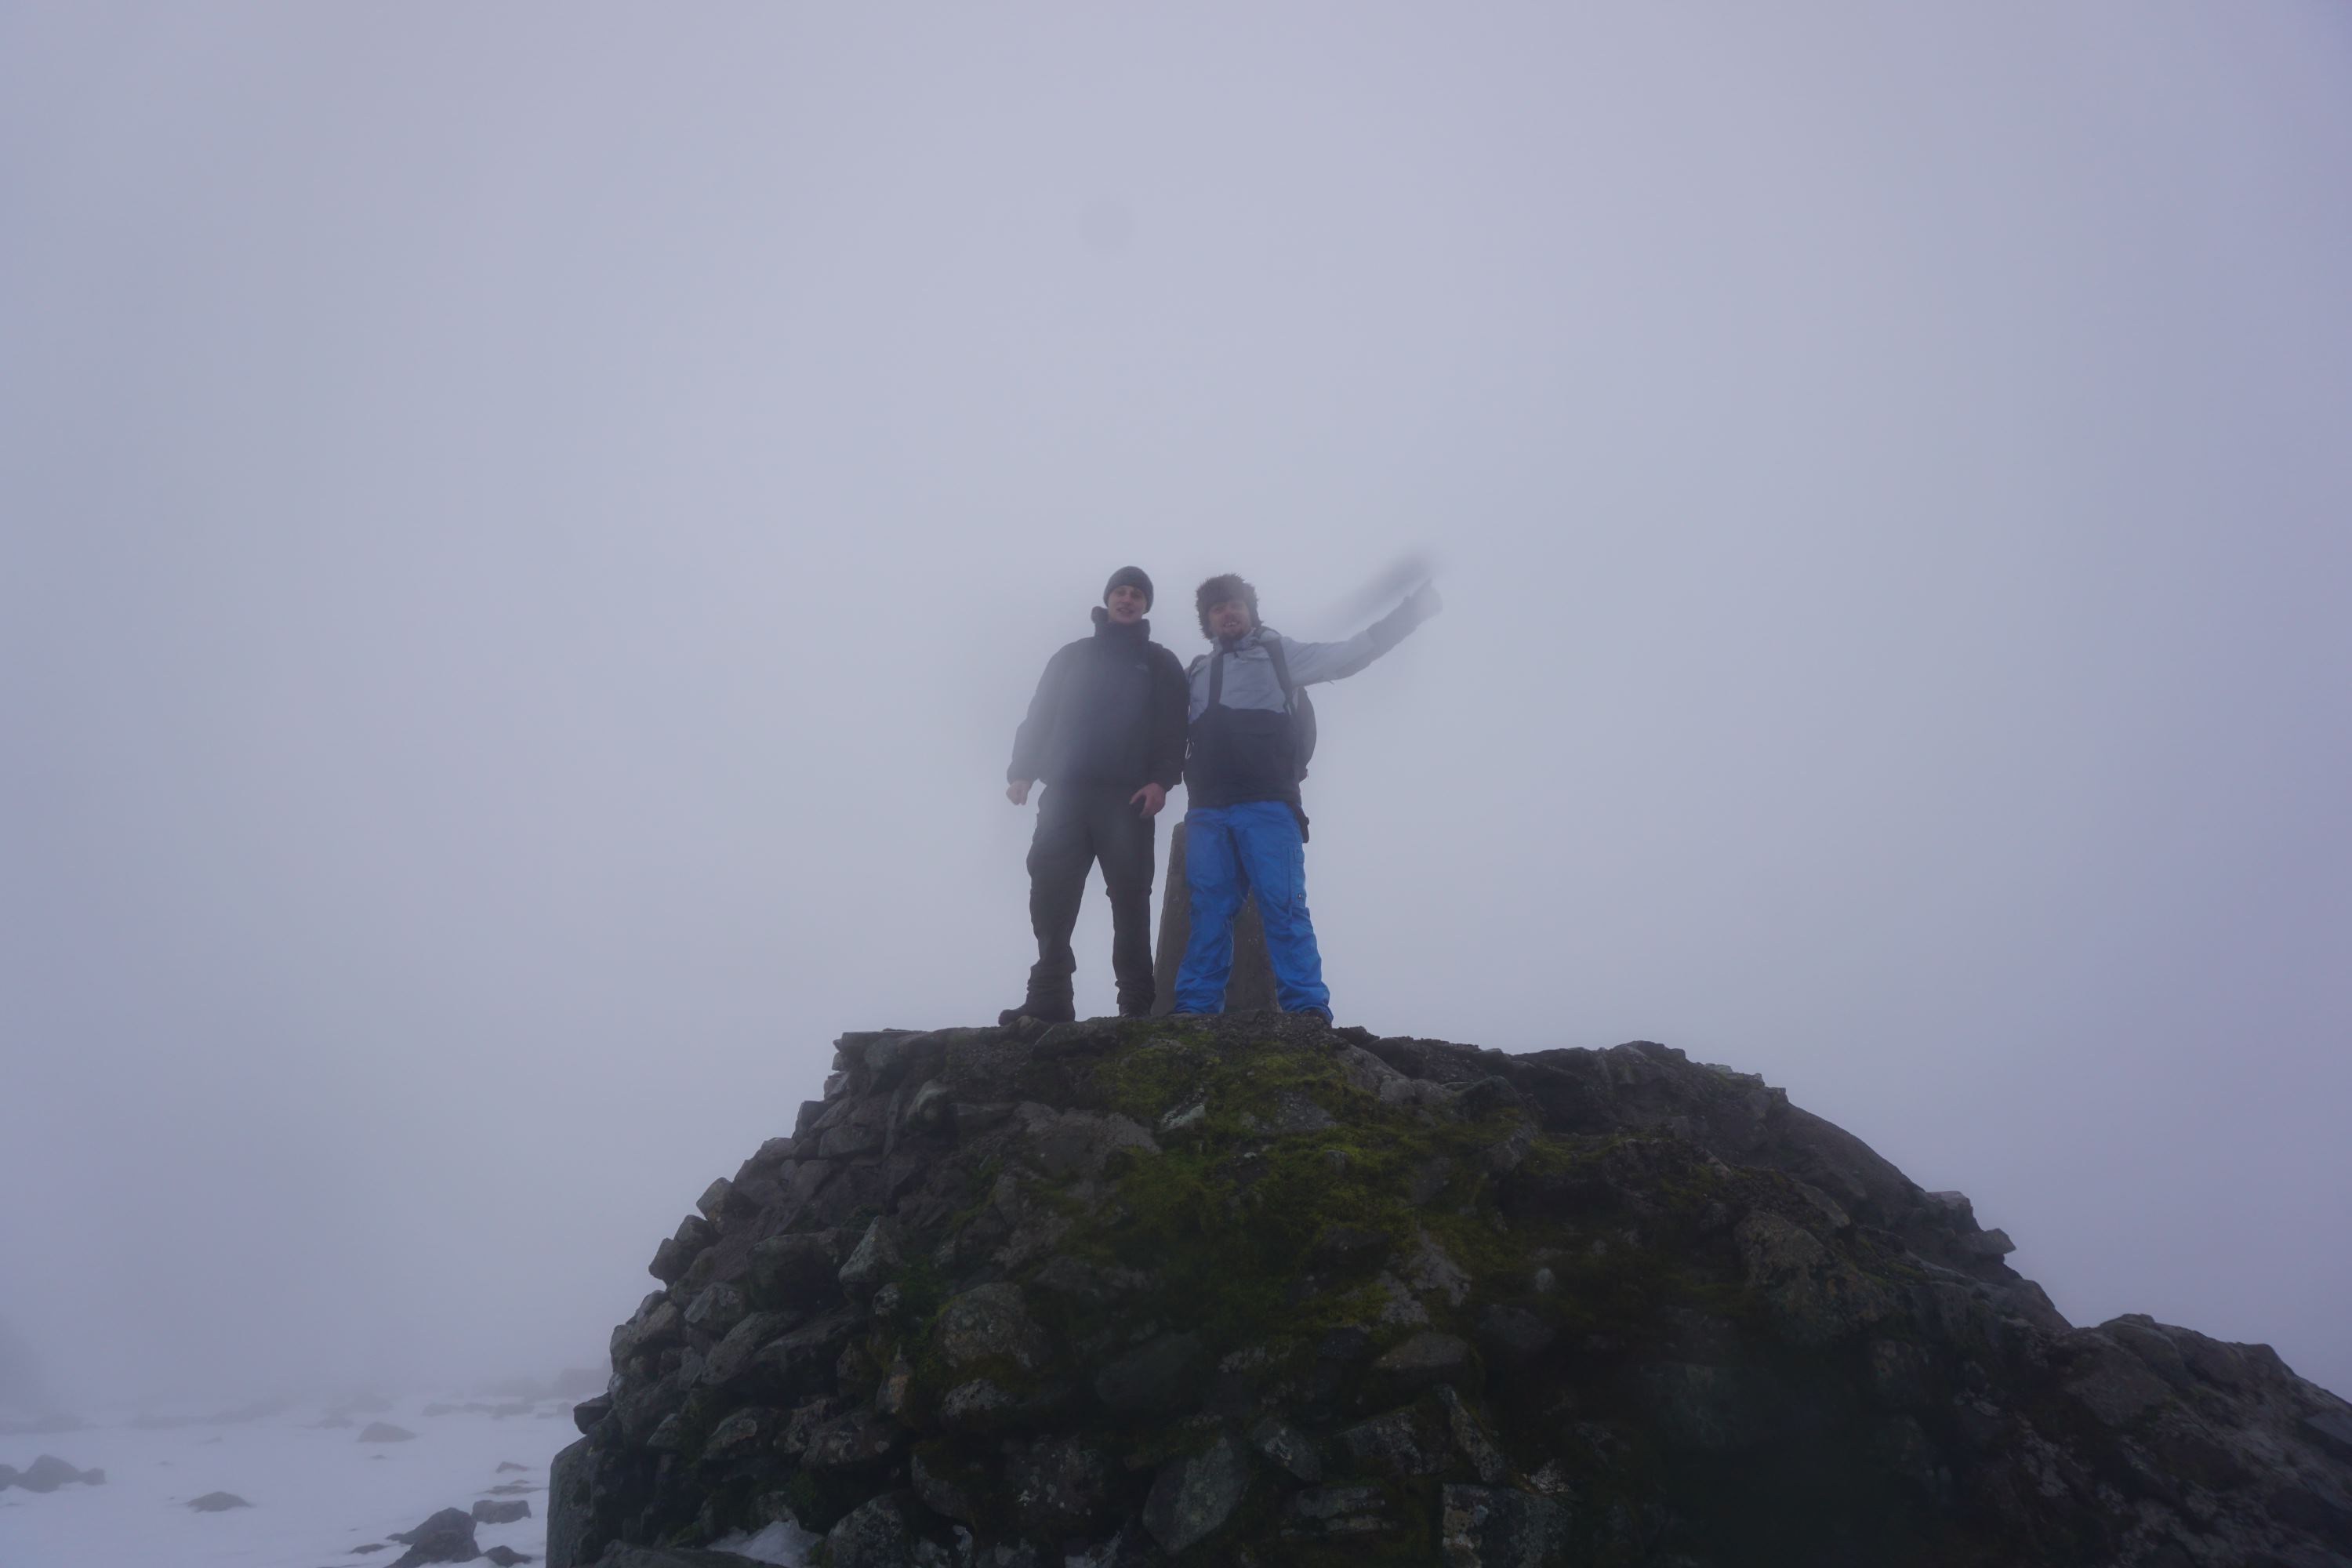 Dan & Robin at the summit of Ben Nevis